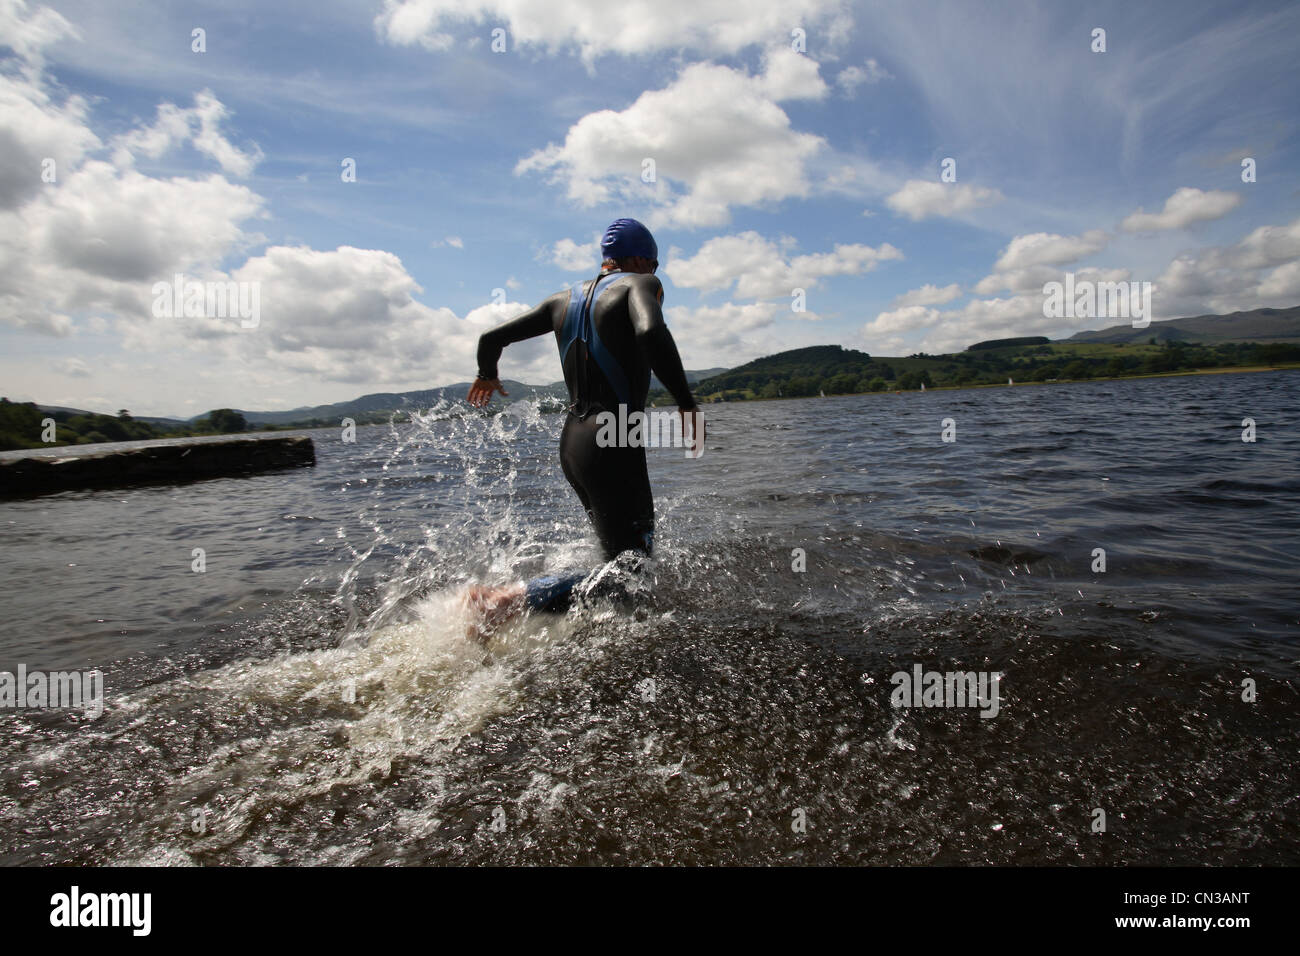 Triathlete swimmer running into water Stock Photo